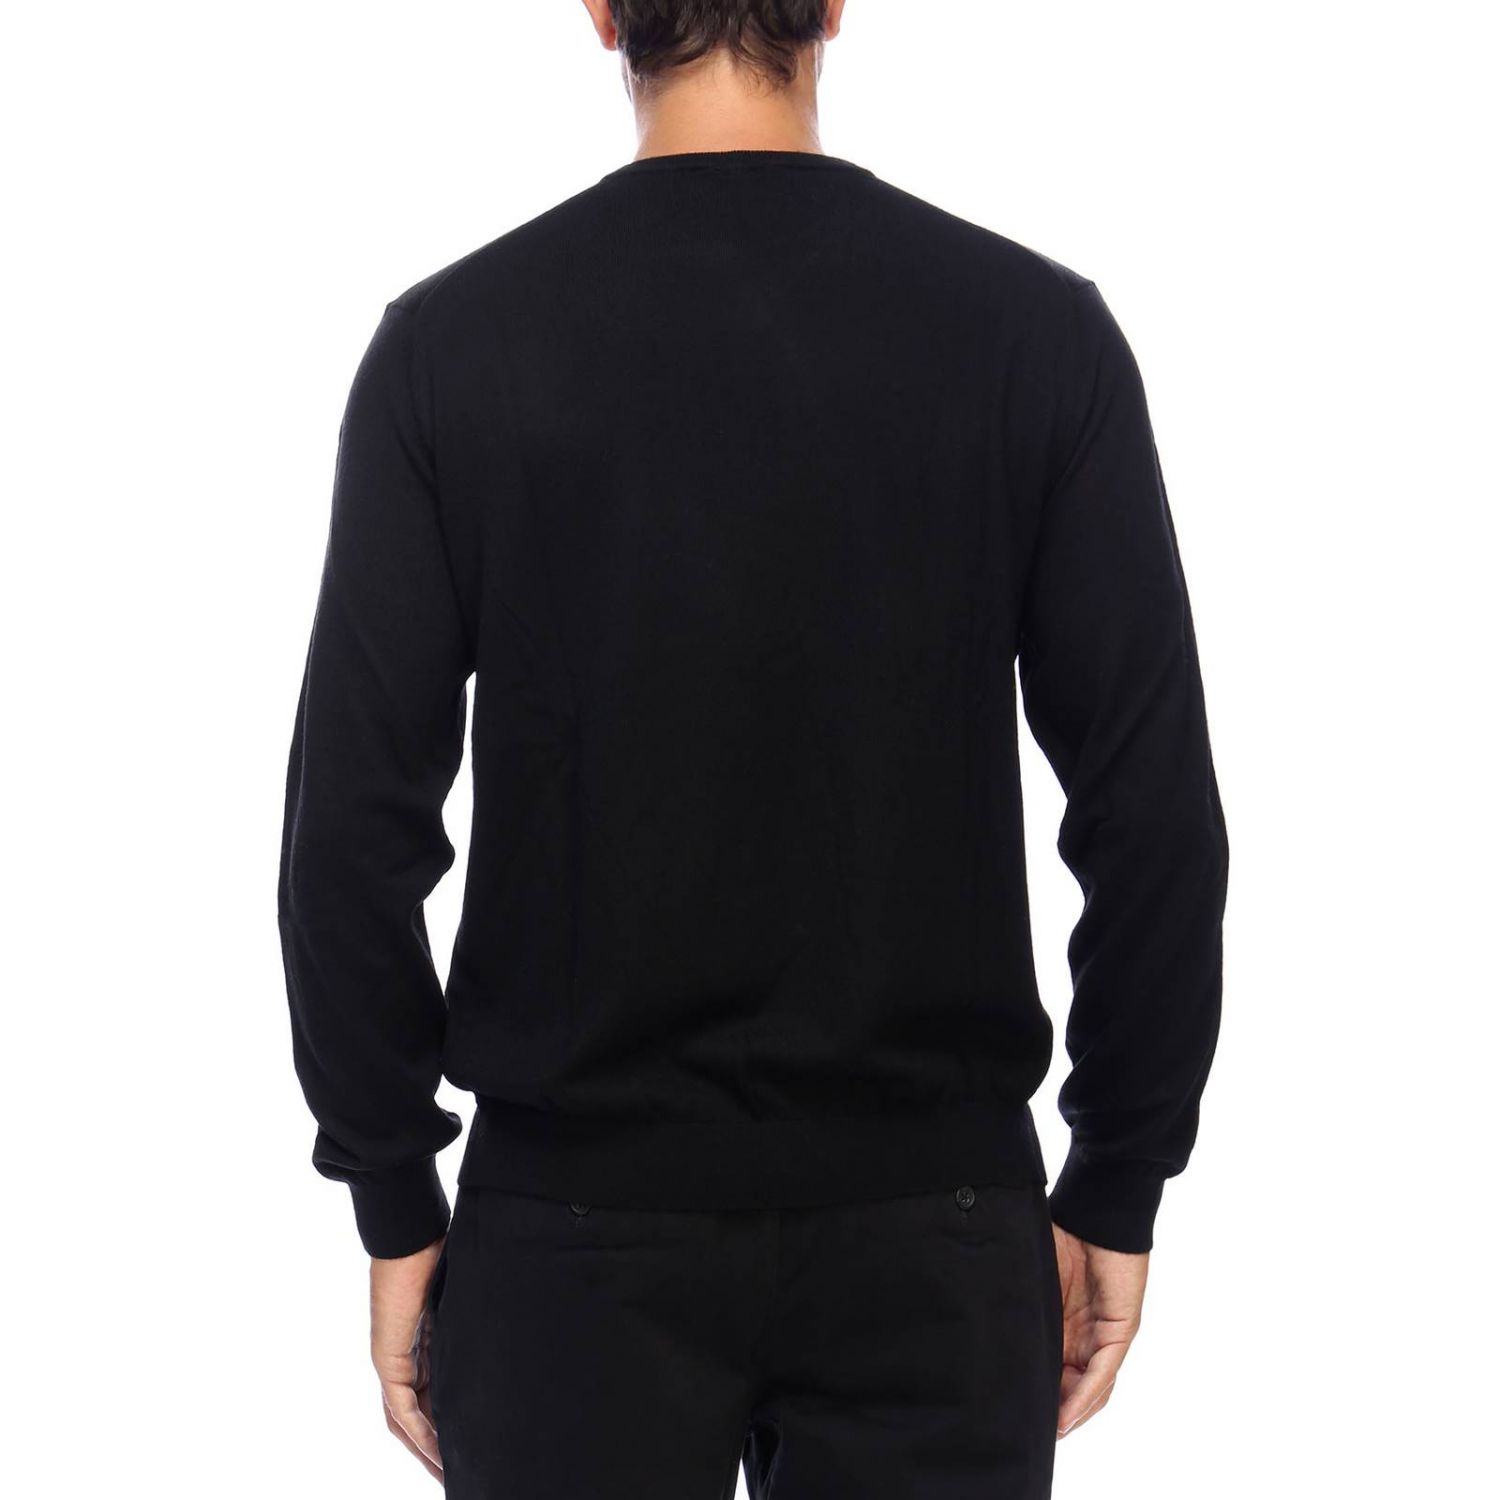 Armani Exchange Outlet: Sweater men | Sweater Armani Exchange Men Black ...